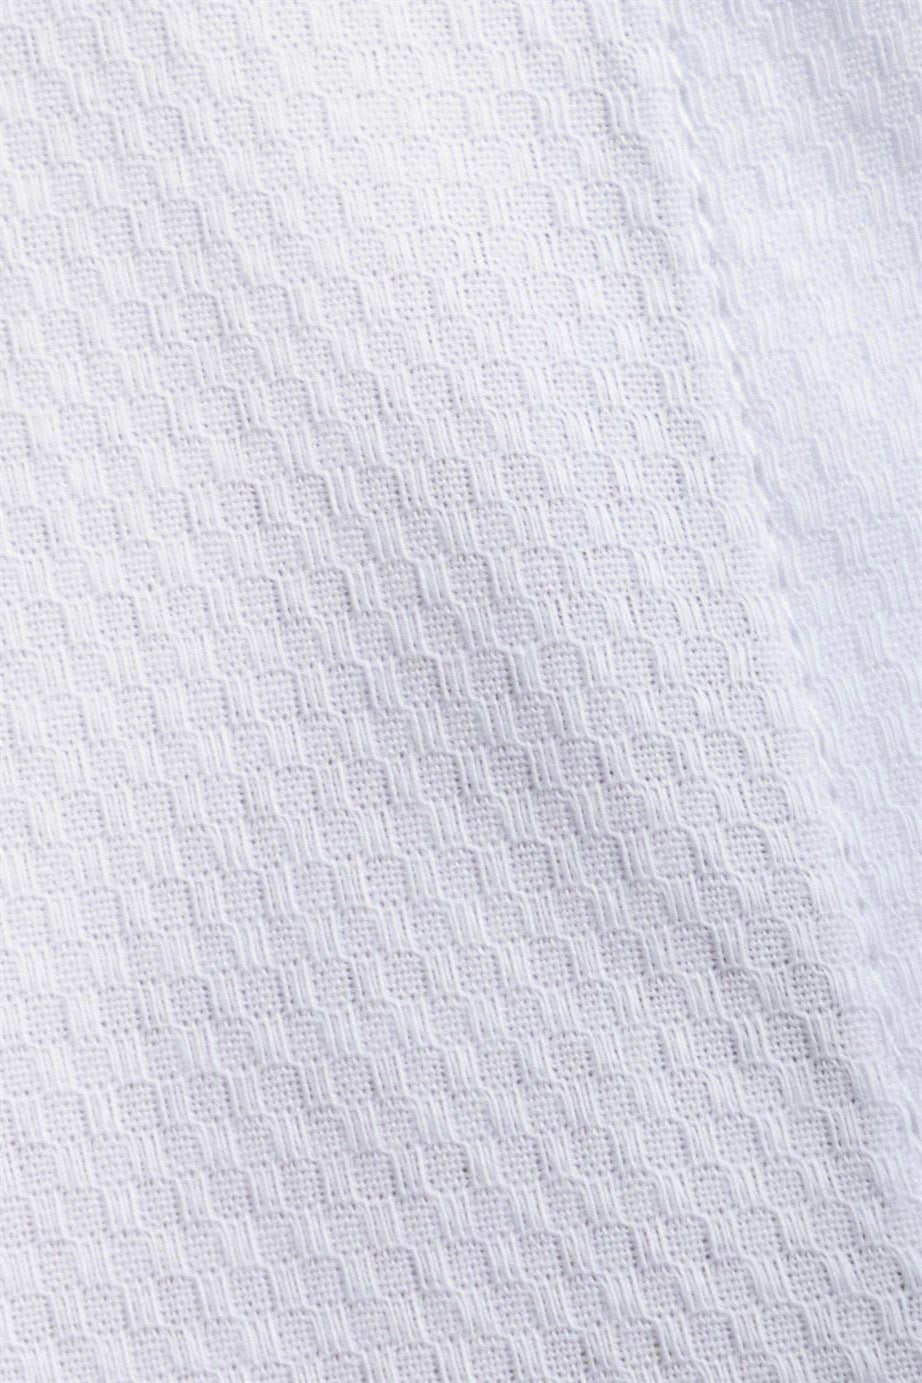 Classic Fit White Sleeve Cotton Shirt 99percenthandmade   